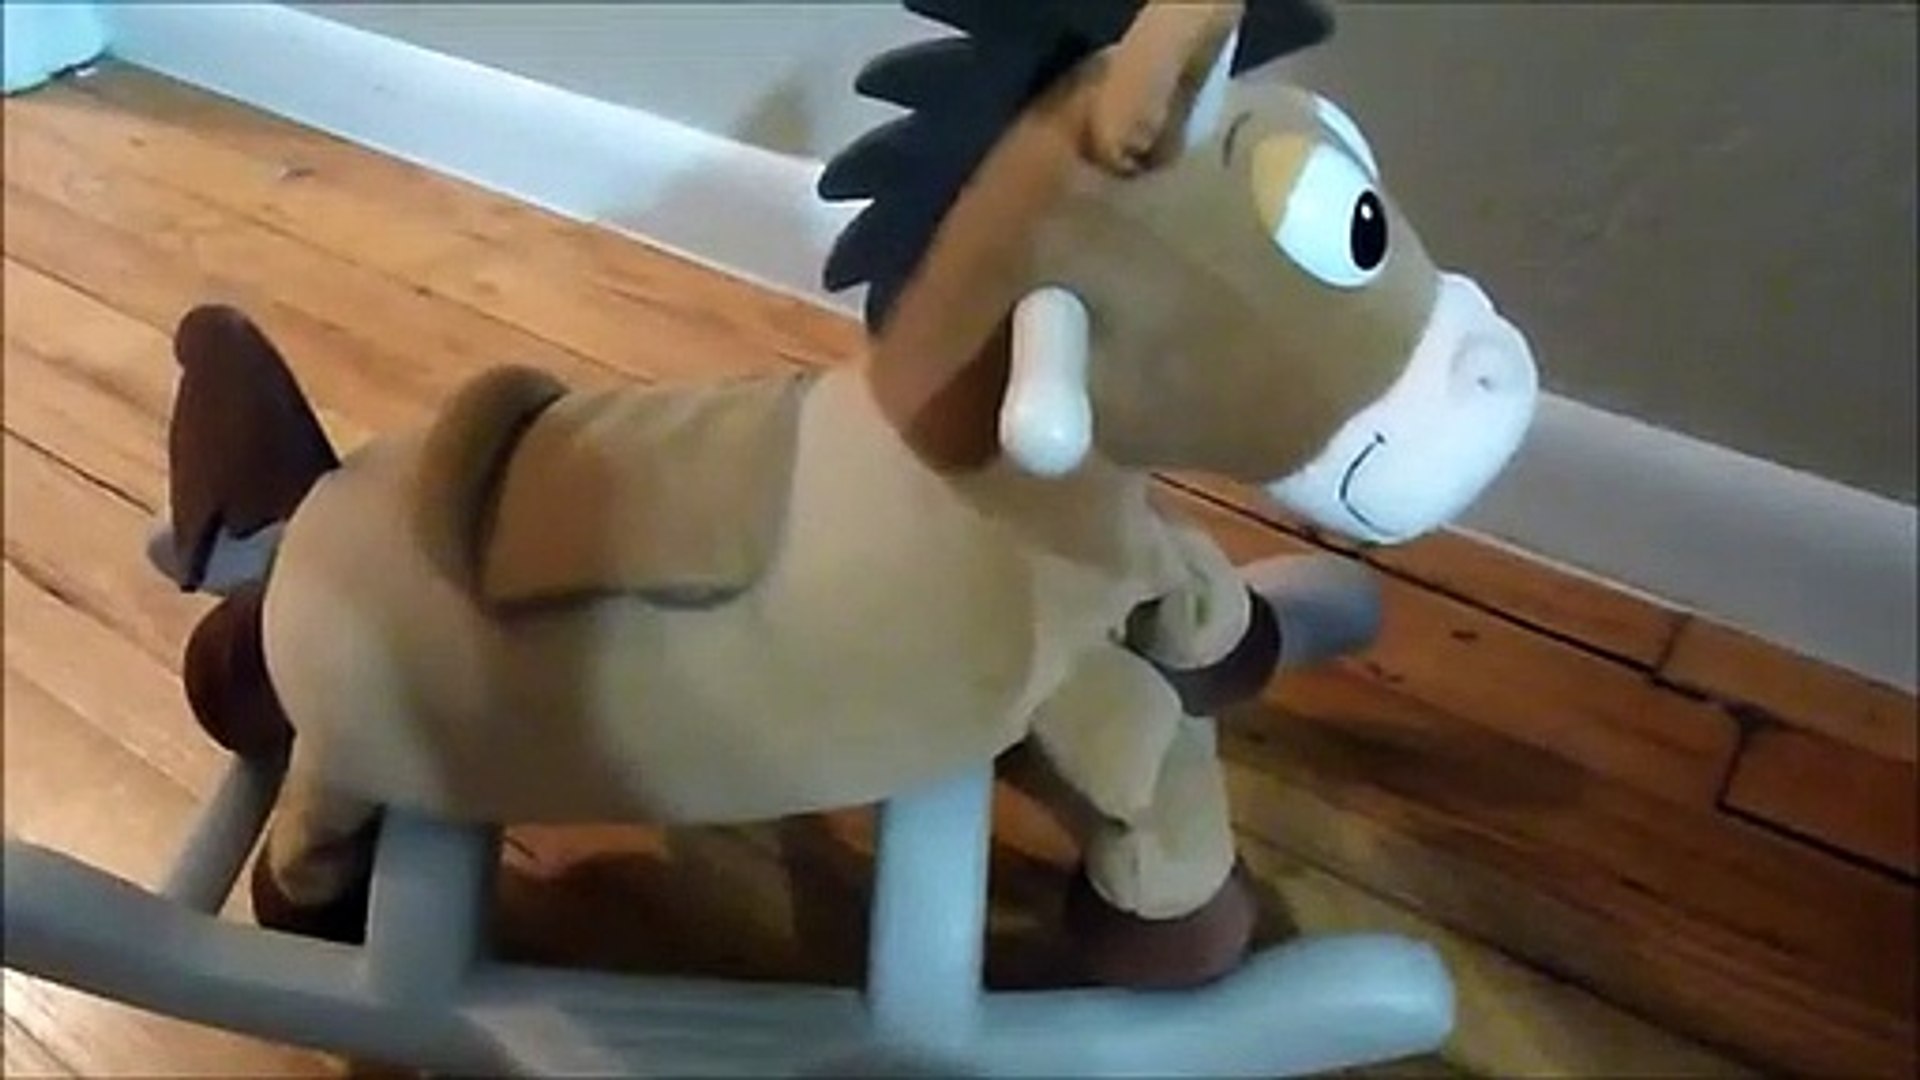 toy story bullseye rocking horse